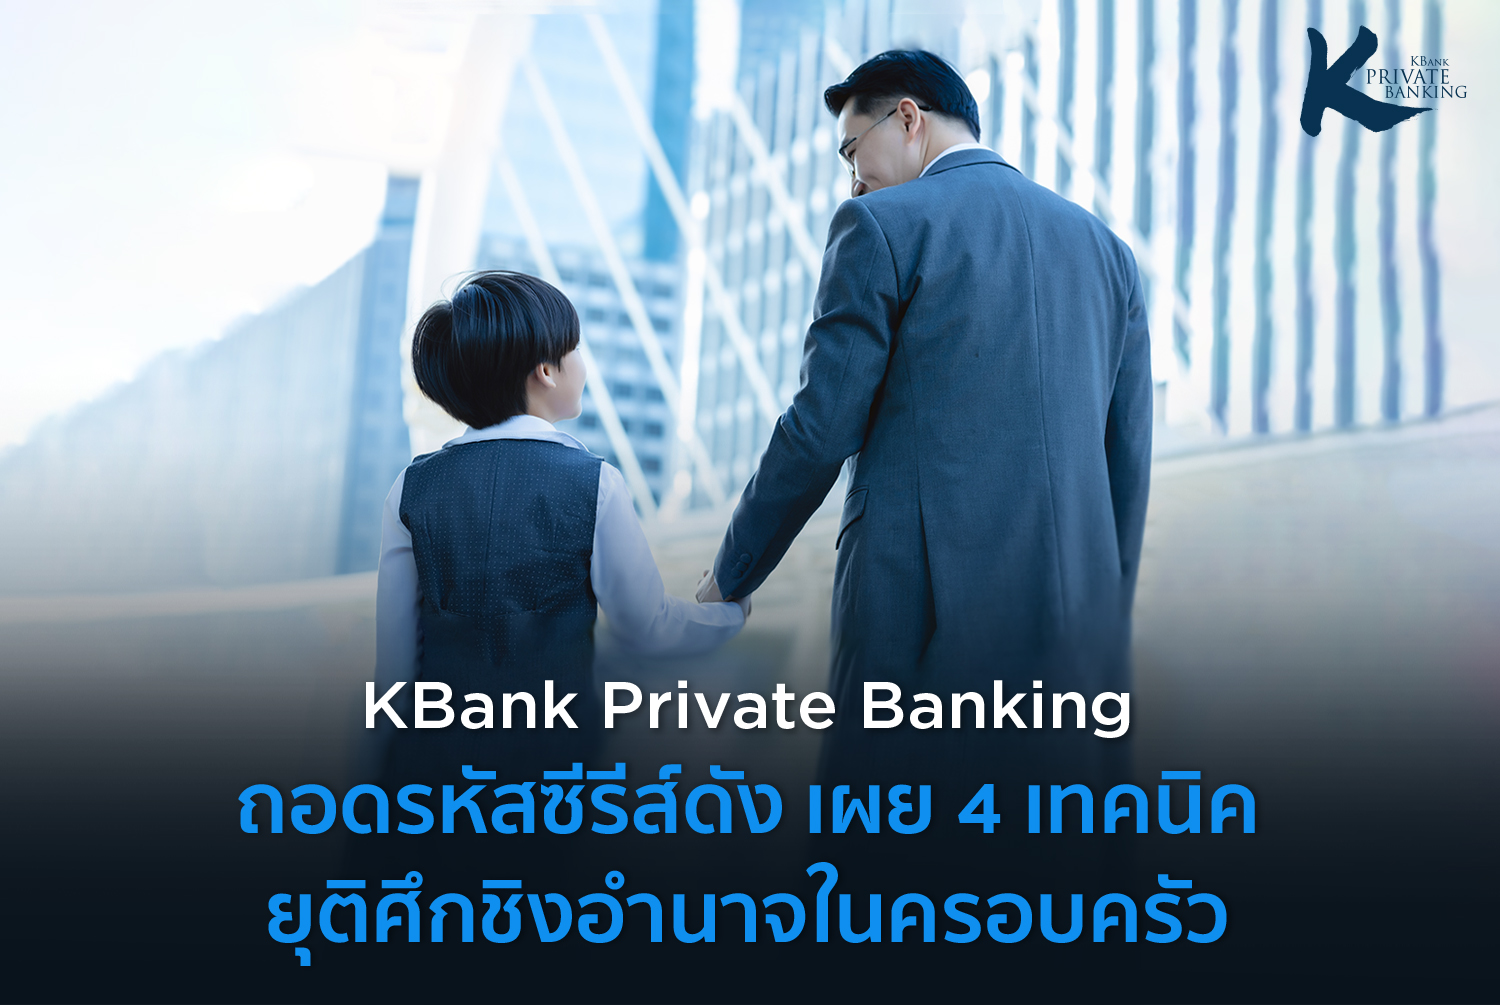 KBank Private Banking ถอดรหัสซีรีส์ดัง เผย 4 เทคนิค ยุติศึกชิงธุรกิจครอบครัว “วางแผน-กำหนดกติกา-สร้างการมีส่วนร่วม-บริหารอย่างมืออาชีพ”